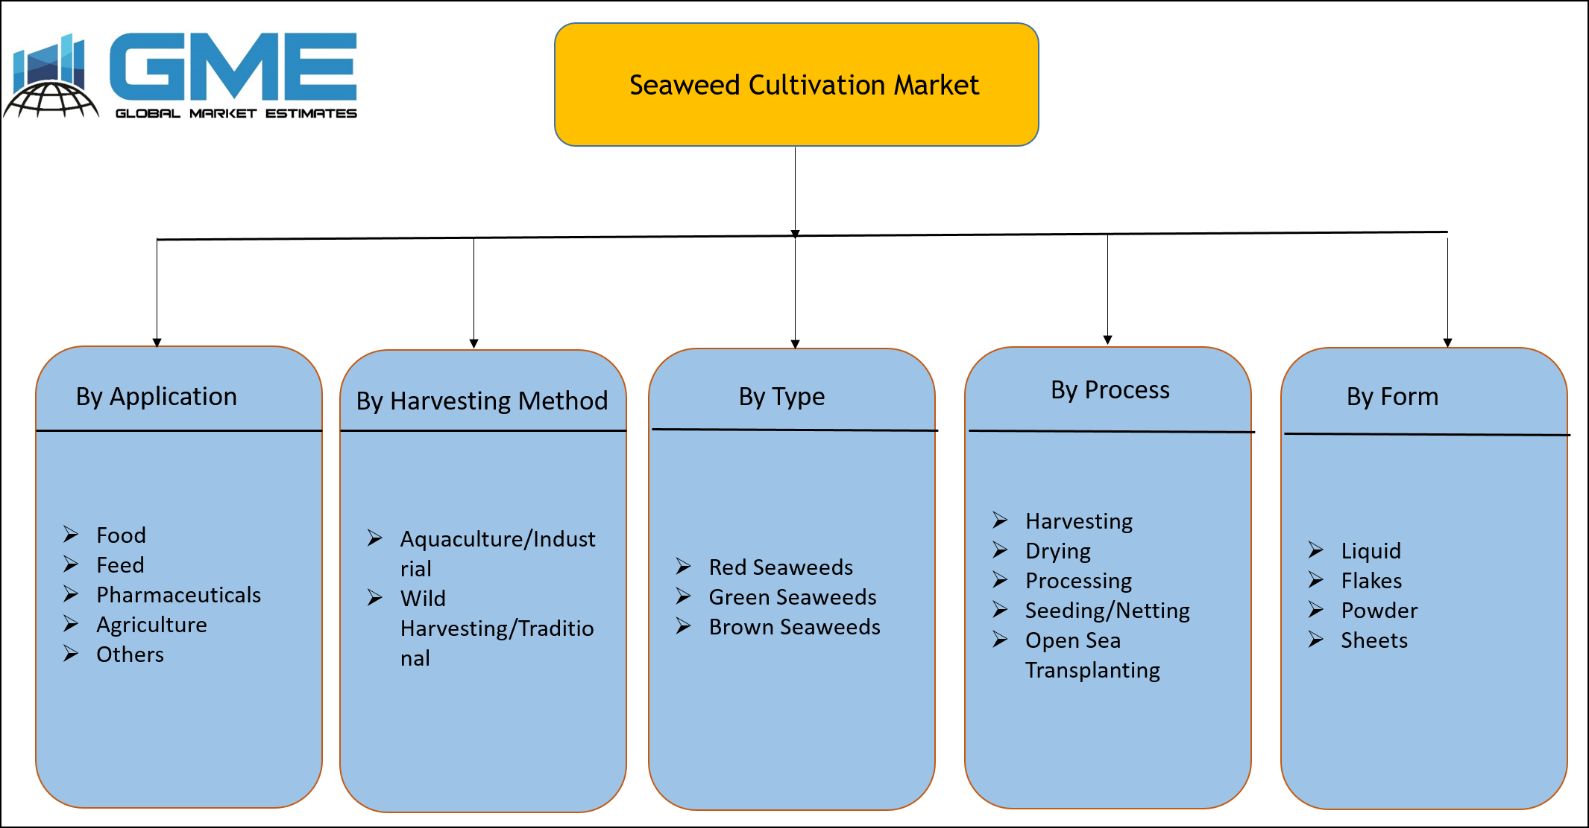 Seaweed Cultivation Market Segmentation